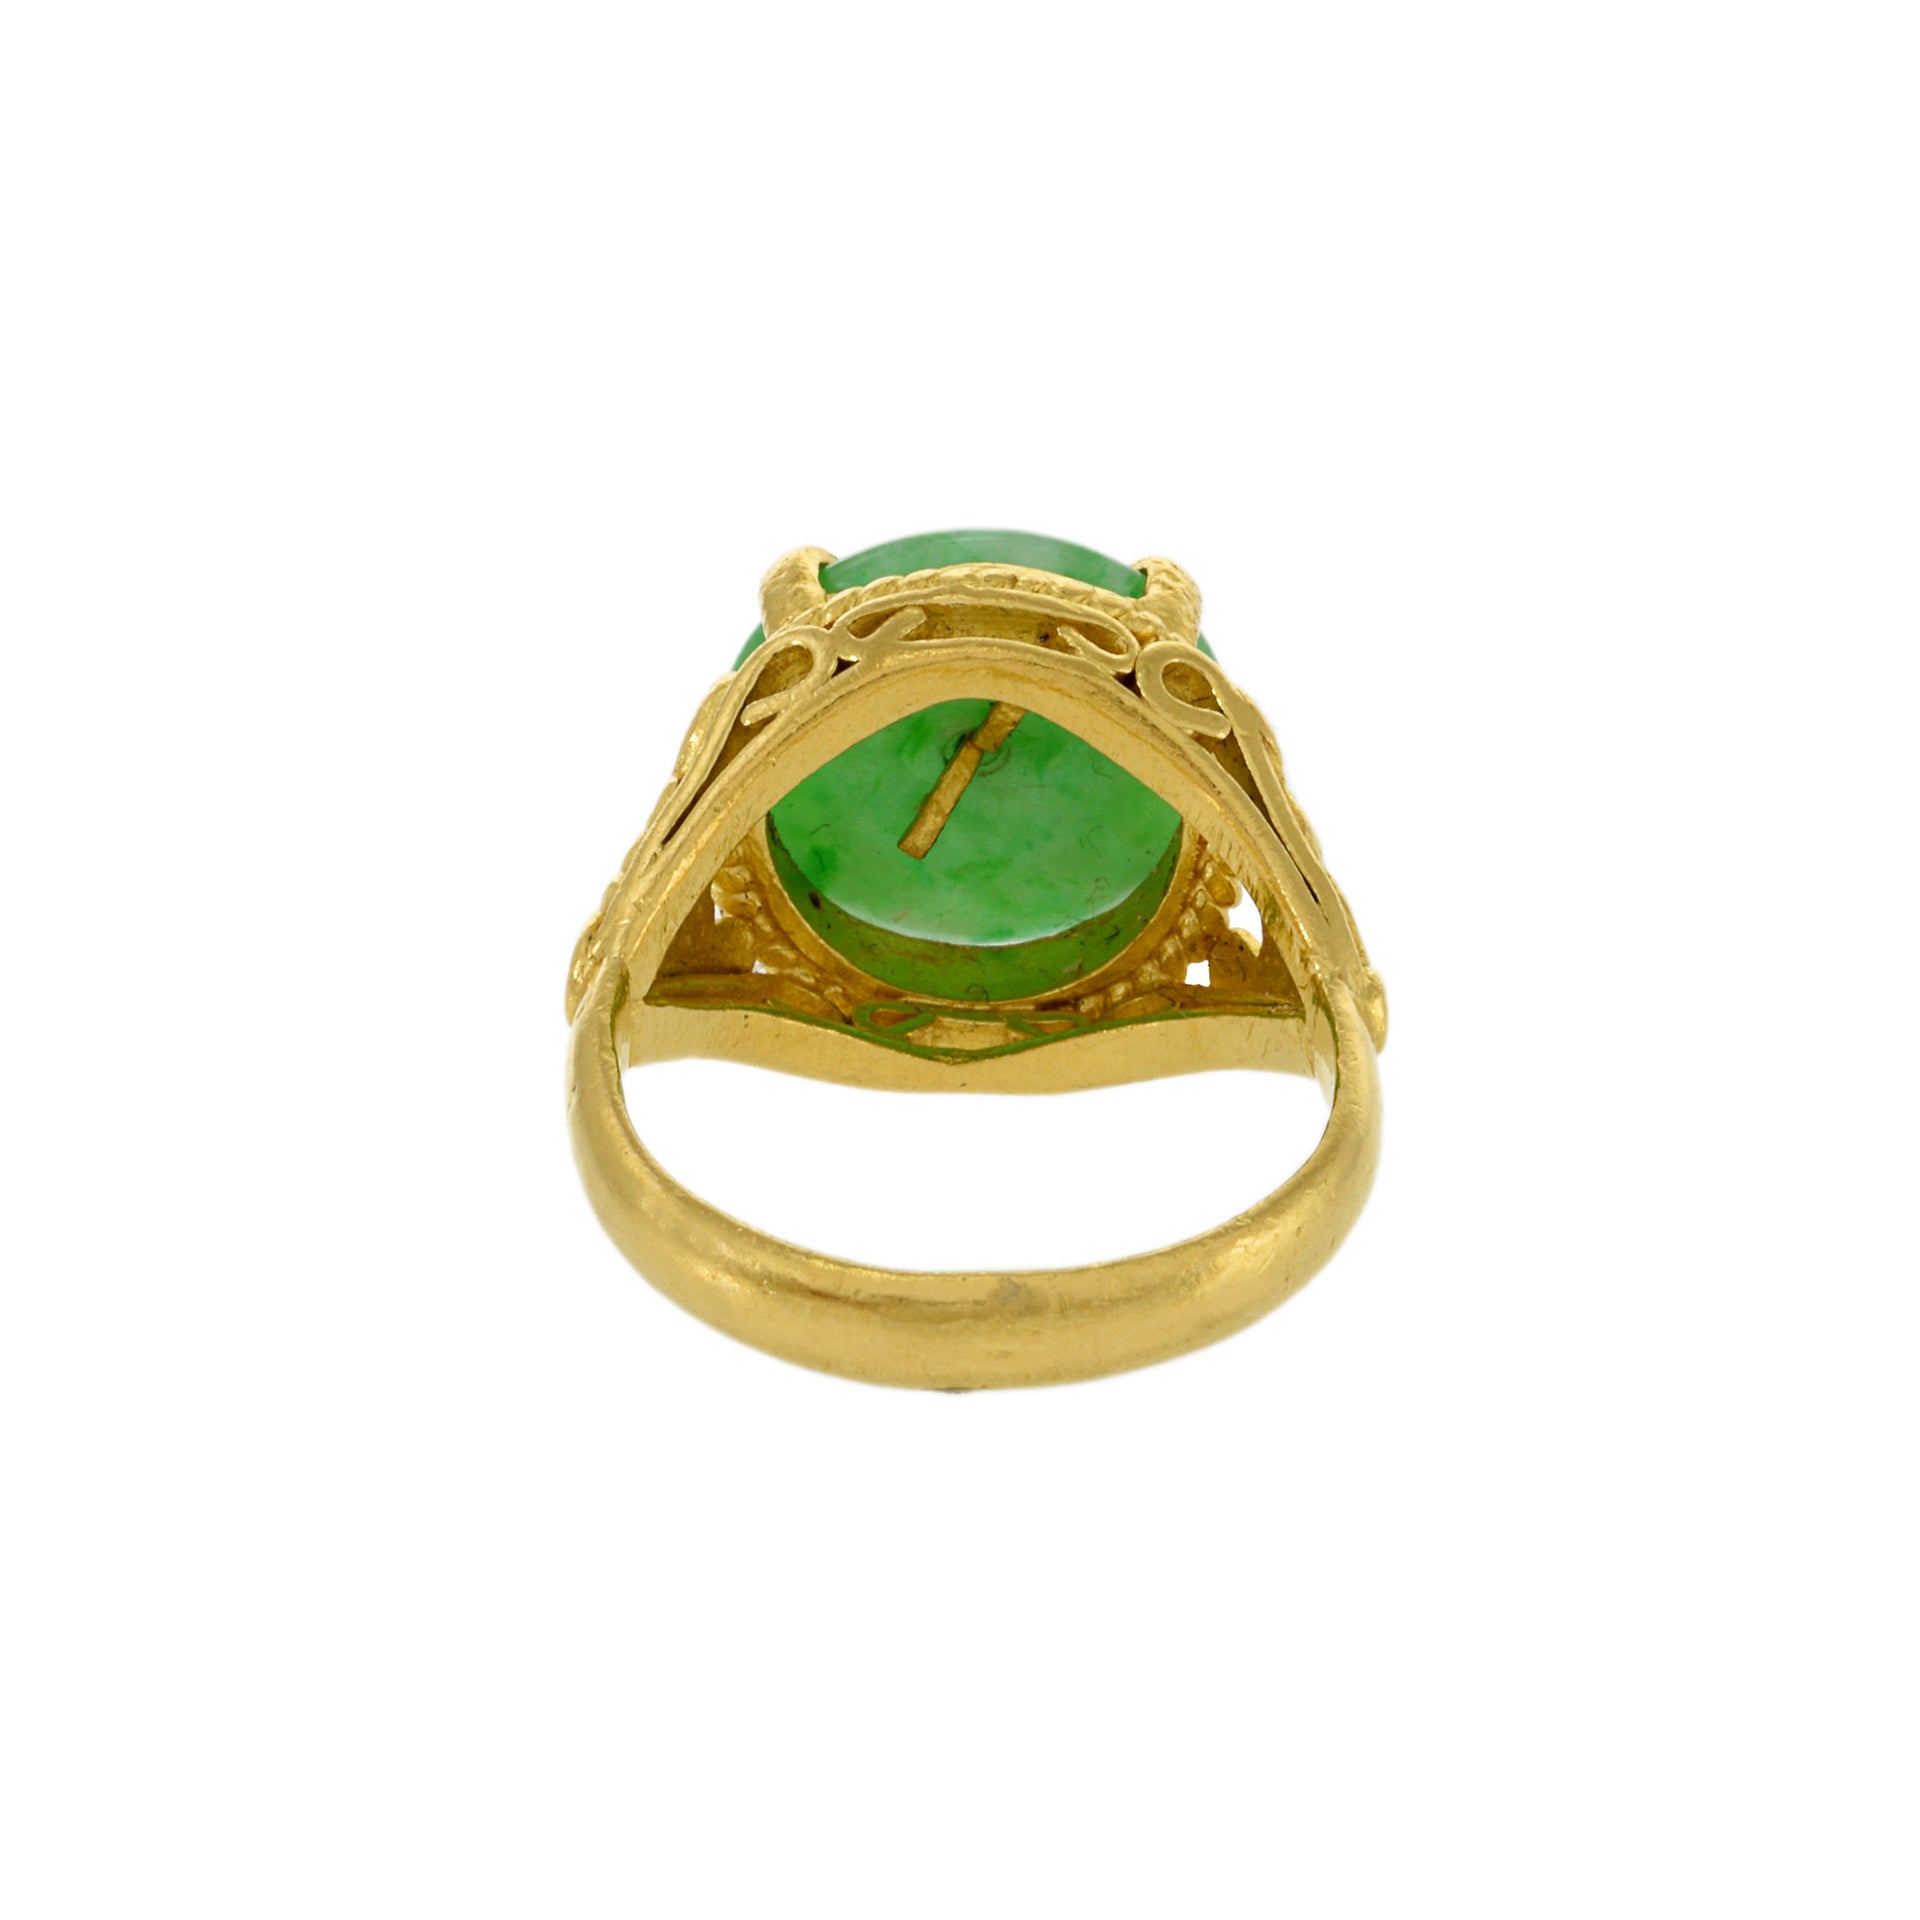 Vintage Retro Era 24KT Yellow Gold Genuine Green Jade Ring